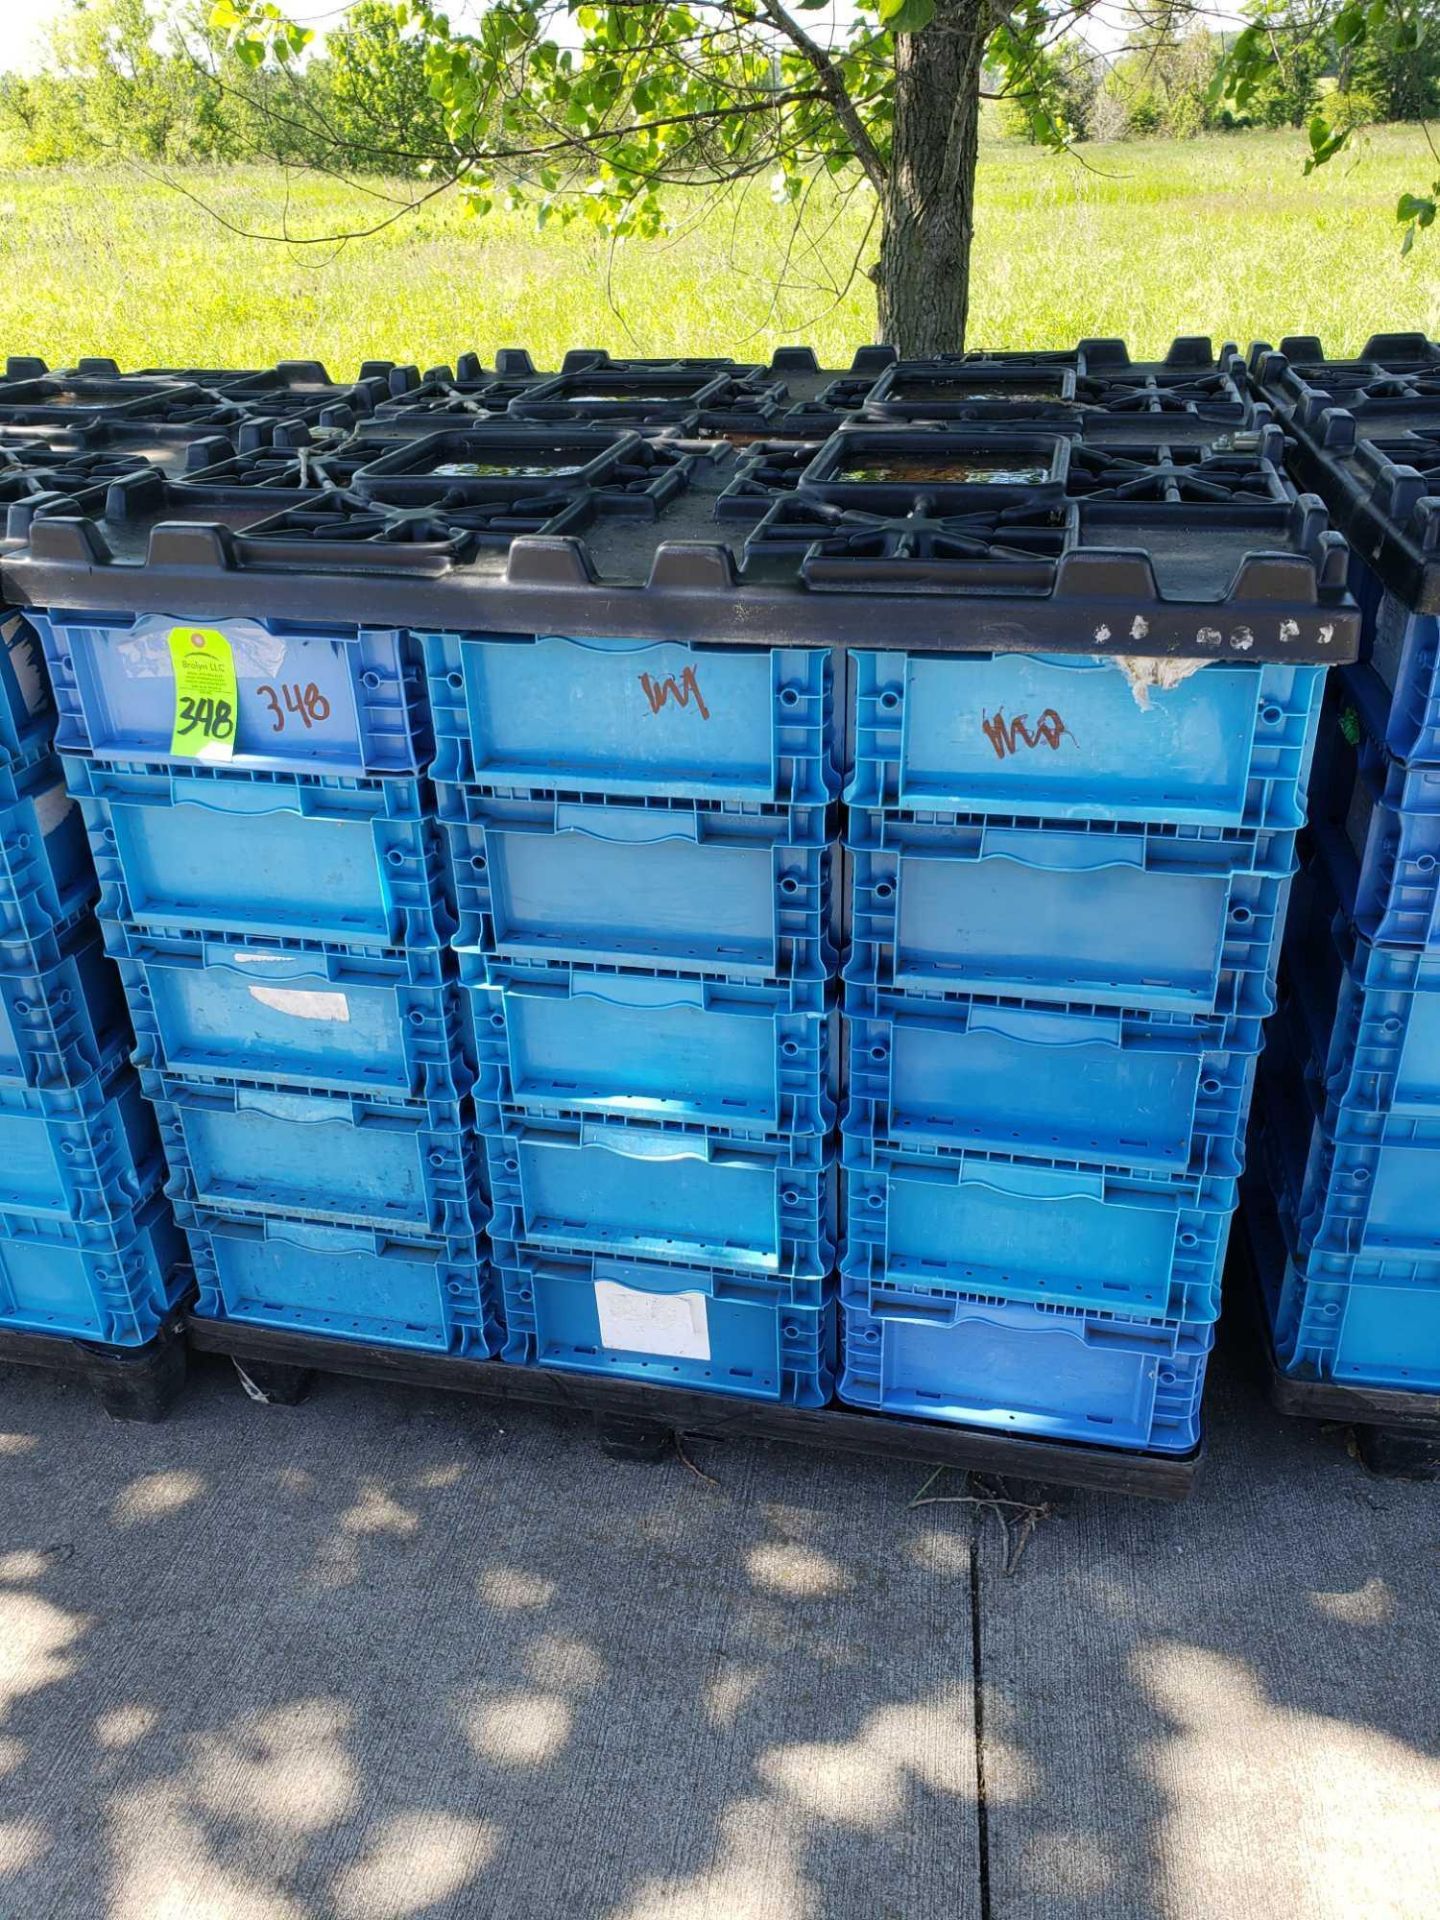 Qty 30 - plastic bins. 24" x 15" x 7" with pallet